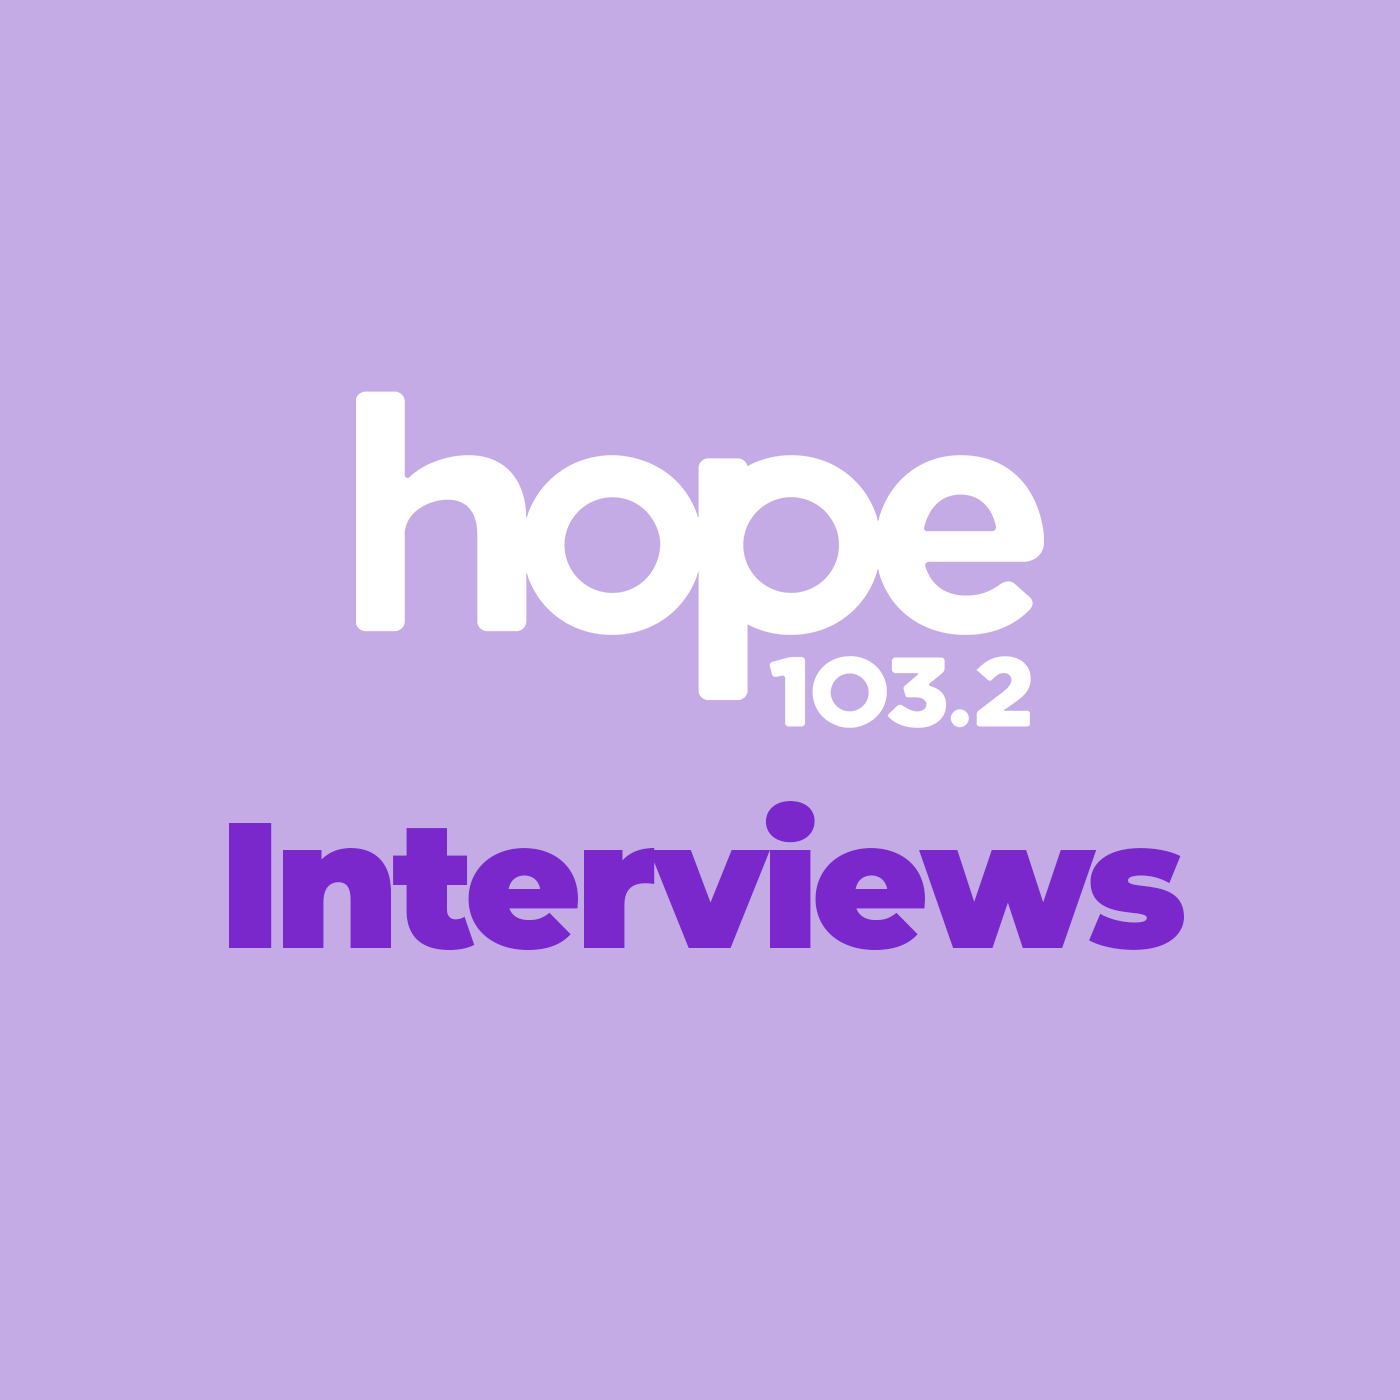 Hope 103.2 Interviews